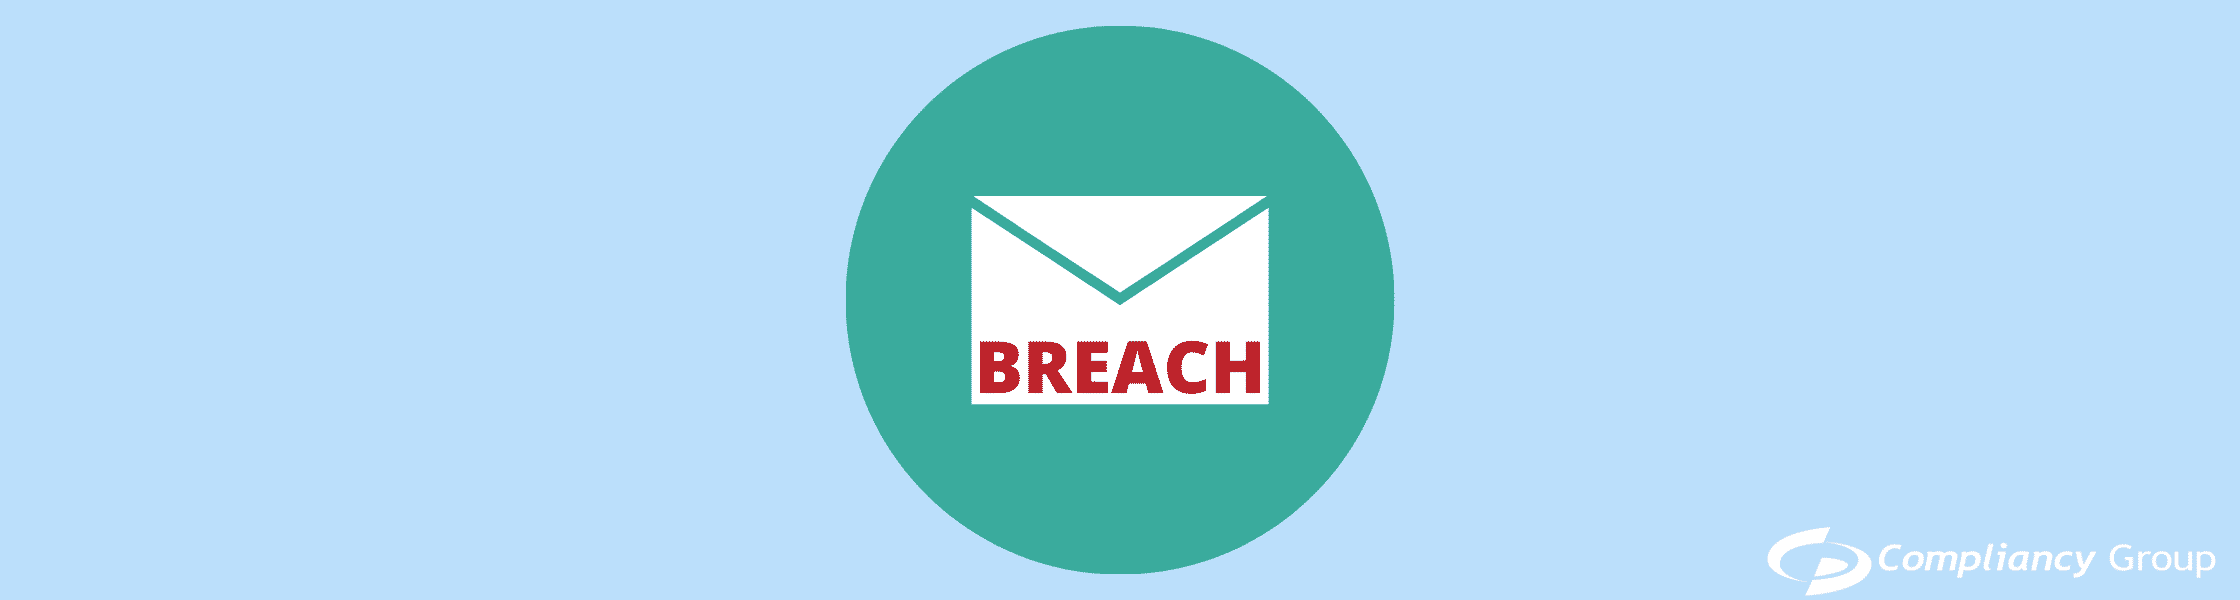 Business Associate Email Breach